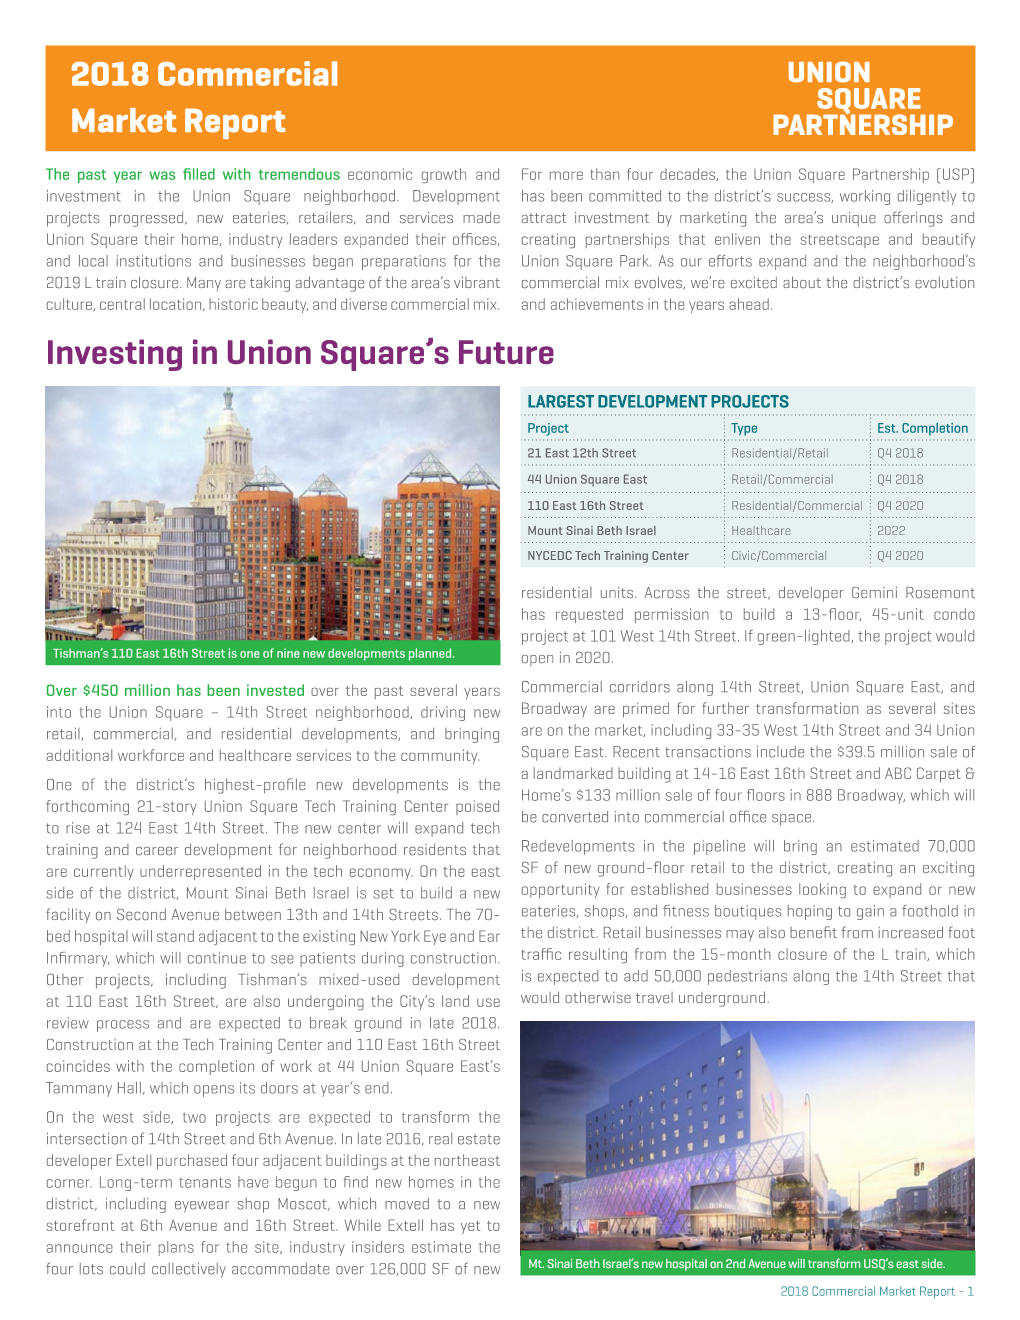 2018 Commercial Market Report Investing in Union Square's Future